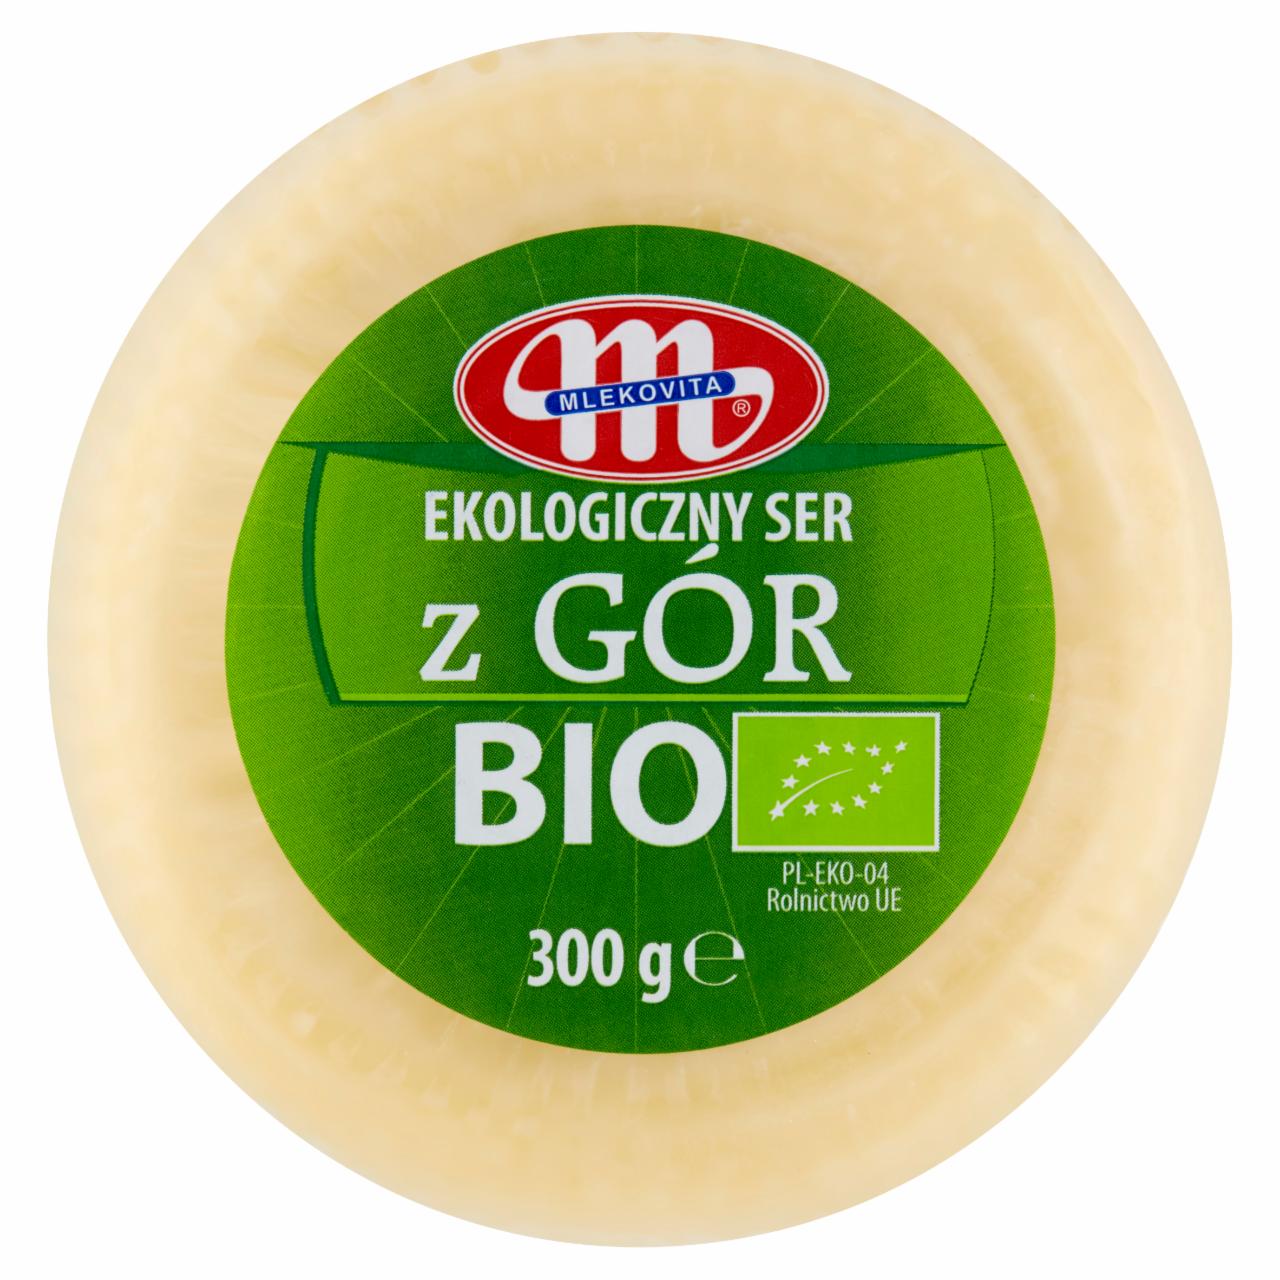 Zdjęcia - Mlekovita BIO Ekologiczny ser z Gór 300 g